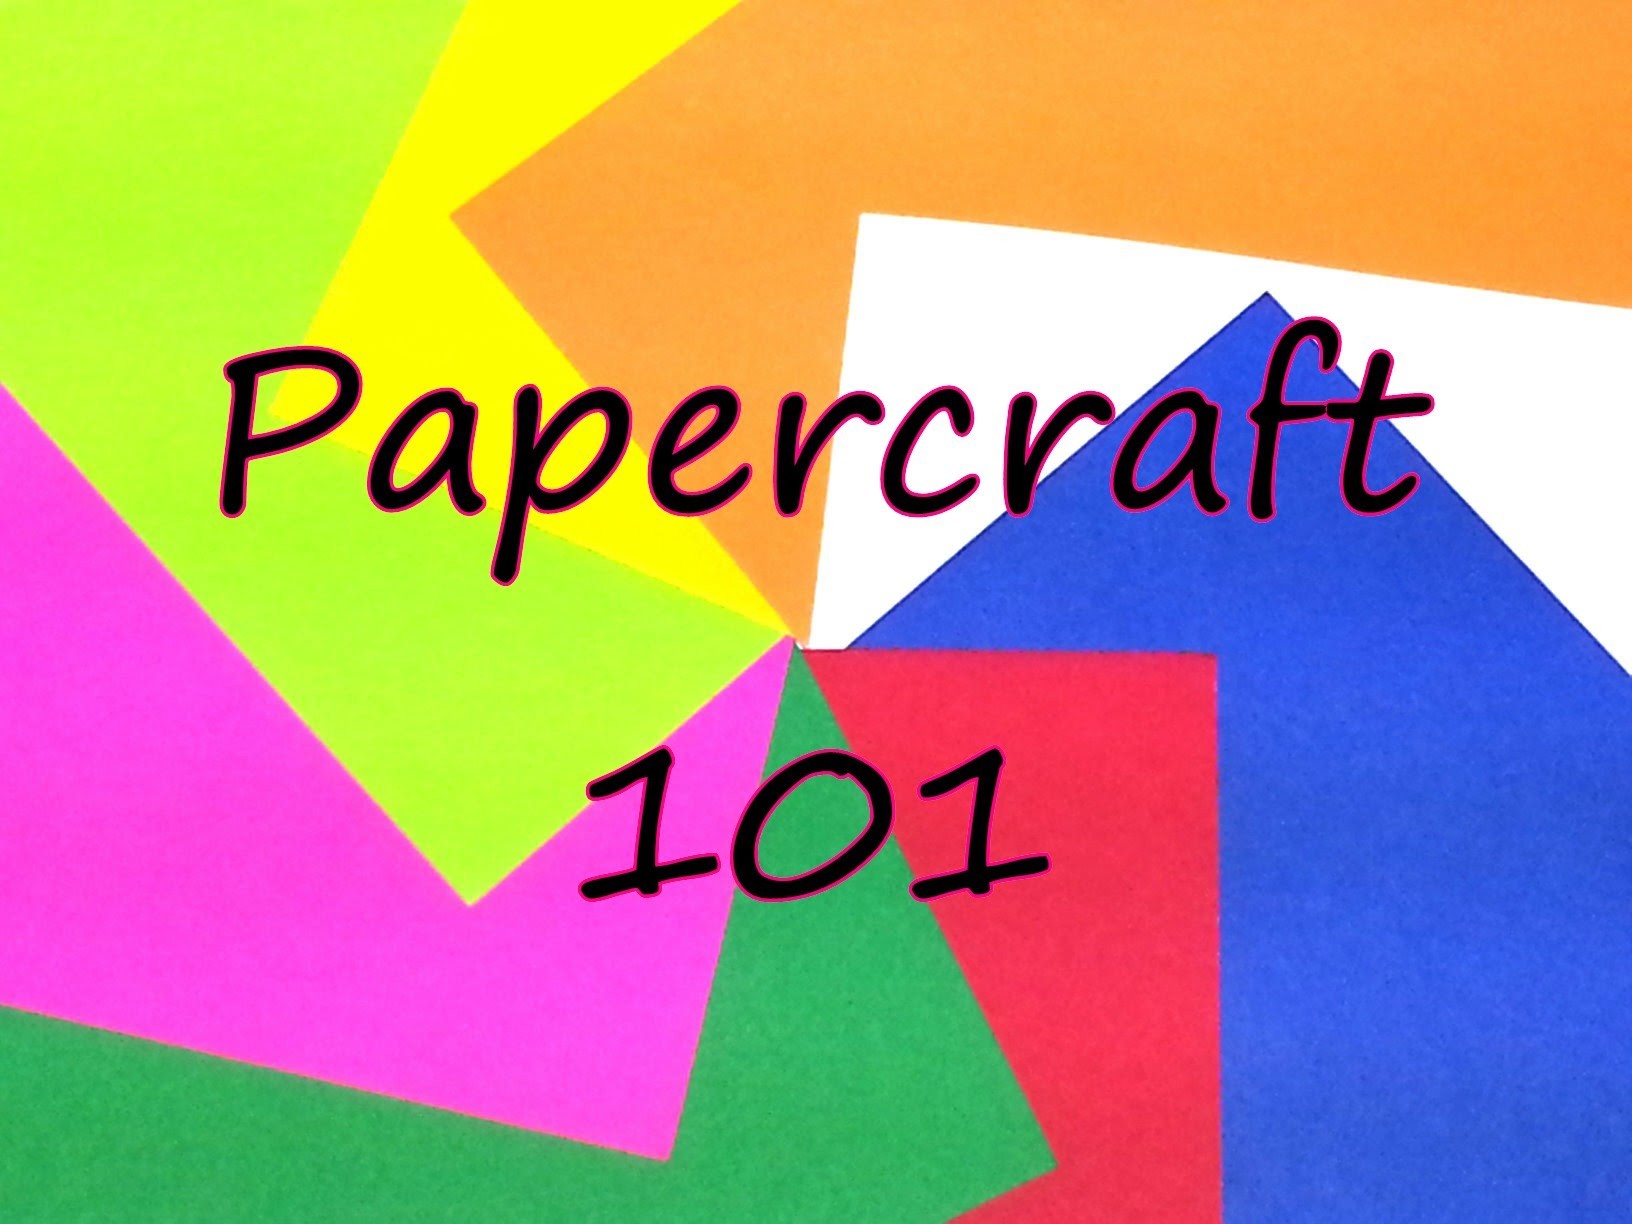 Papercraft 101 by feelinspiffy (Papercraft)